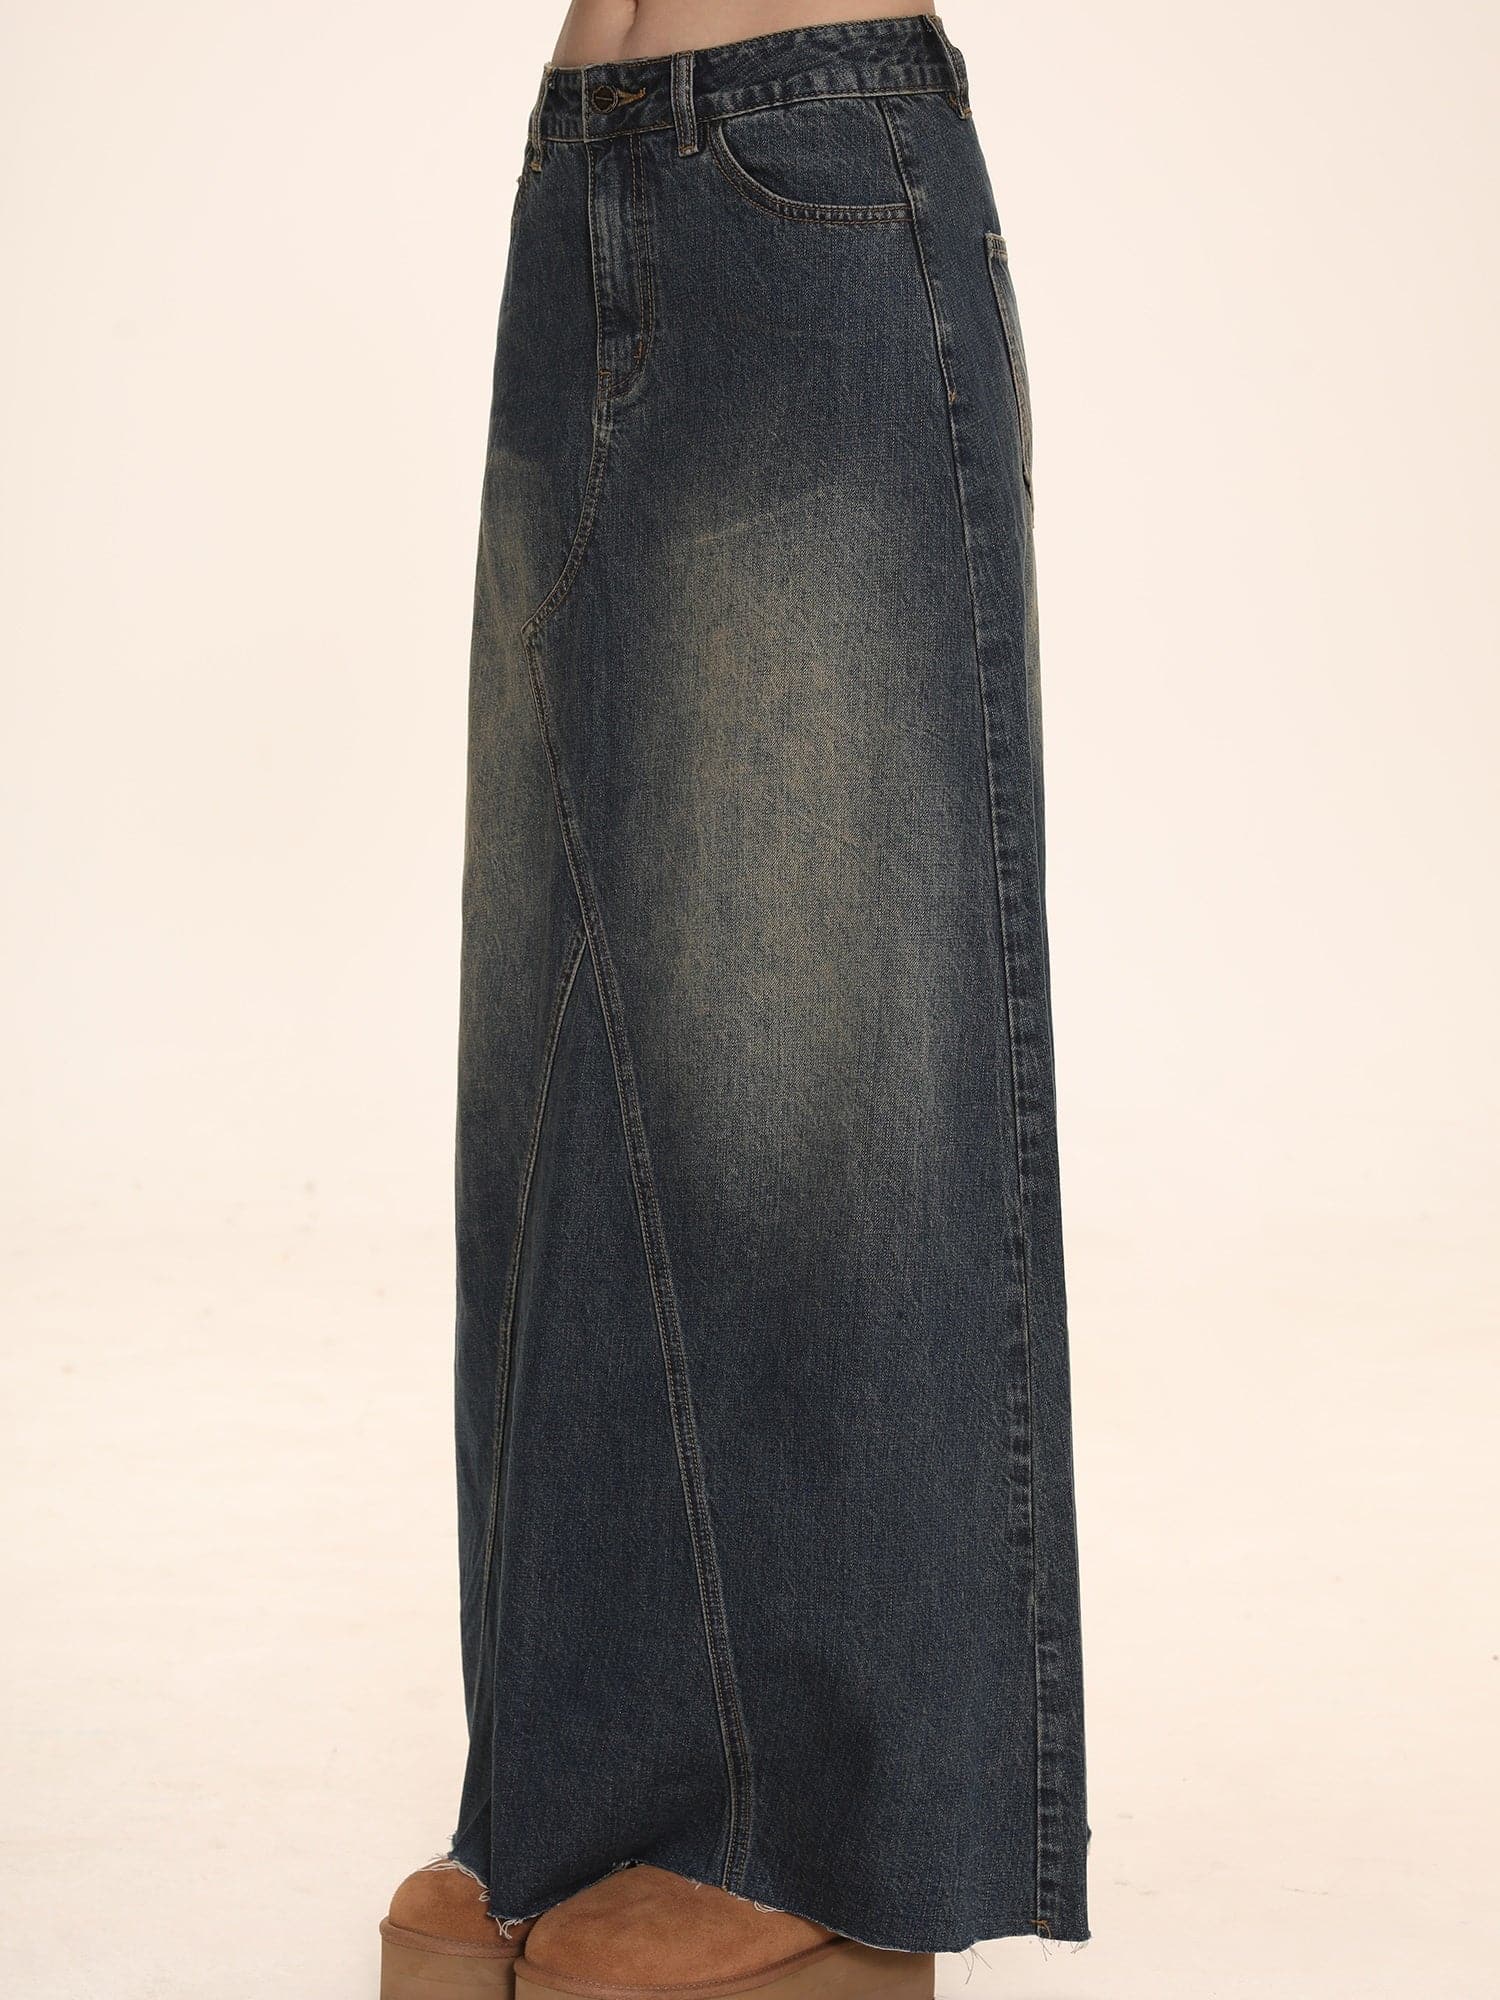 Denim Skirt - A-Kine Collection - chiclara